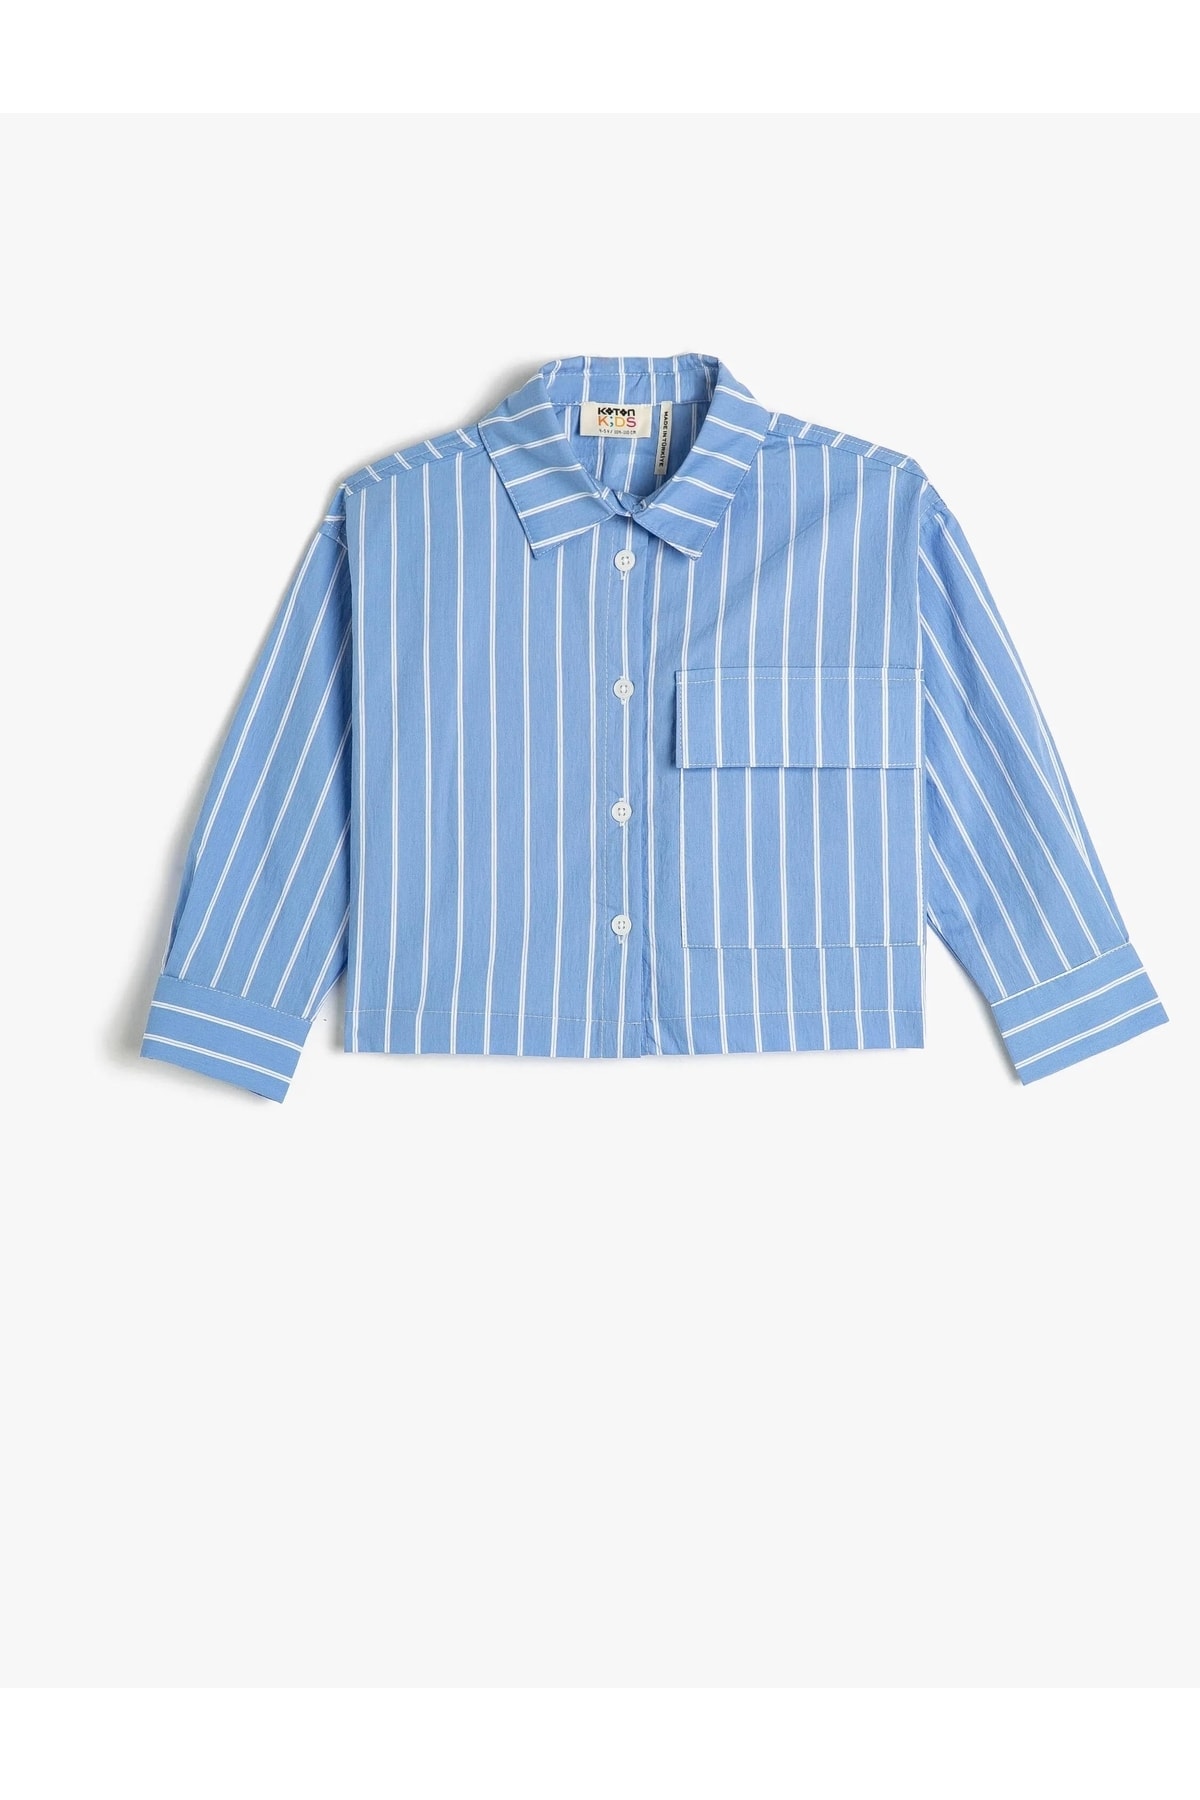 Koton 3skg60098aw Girls' Shirt Blue Striped